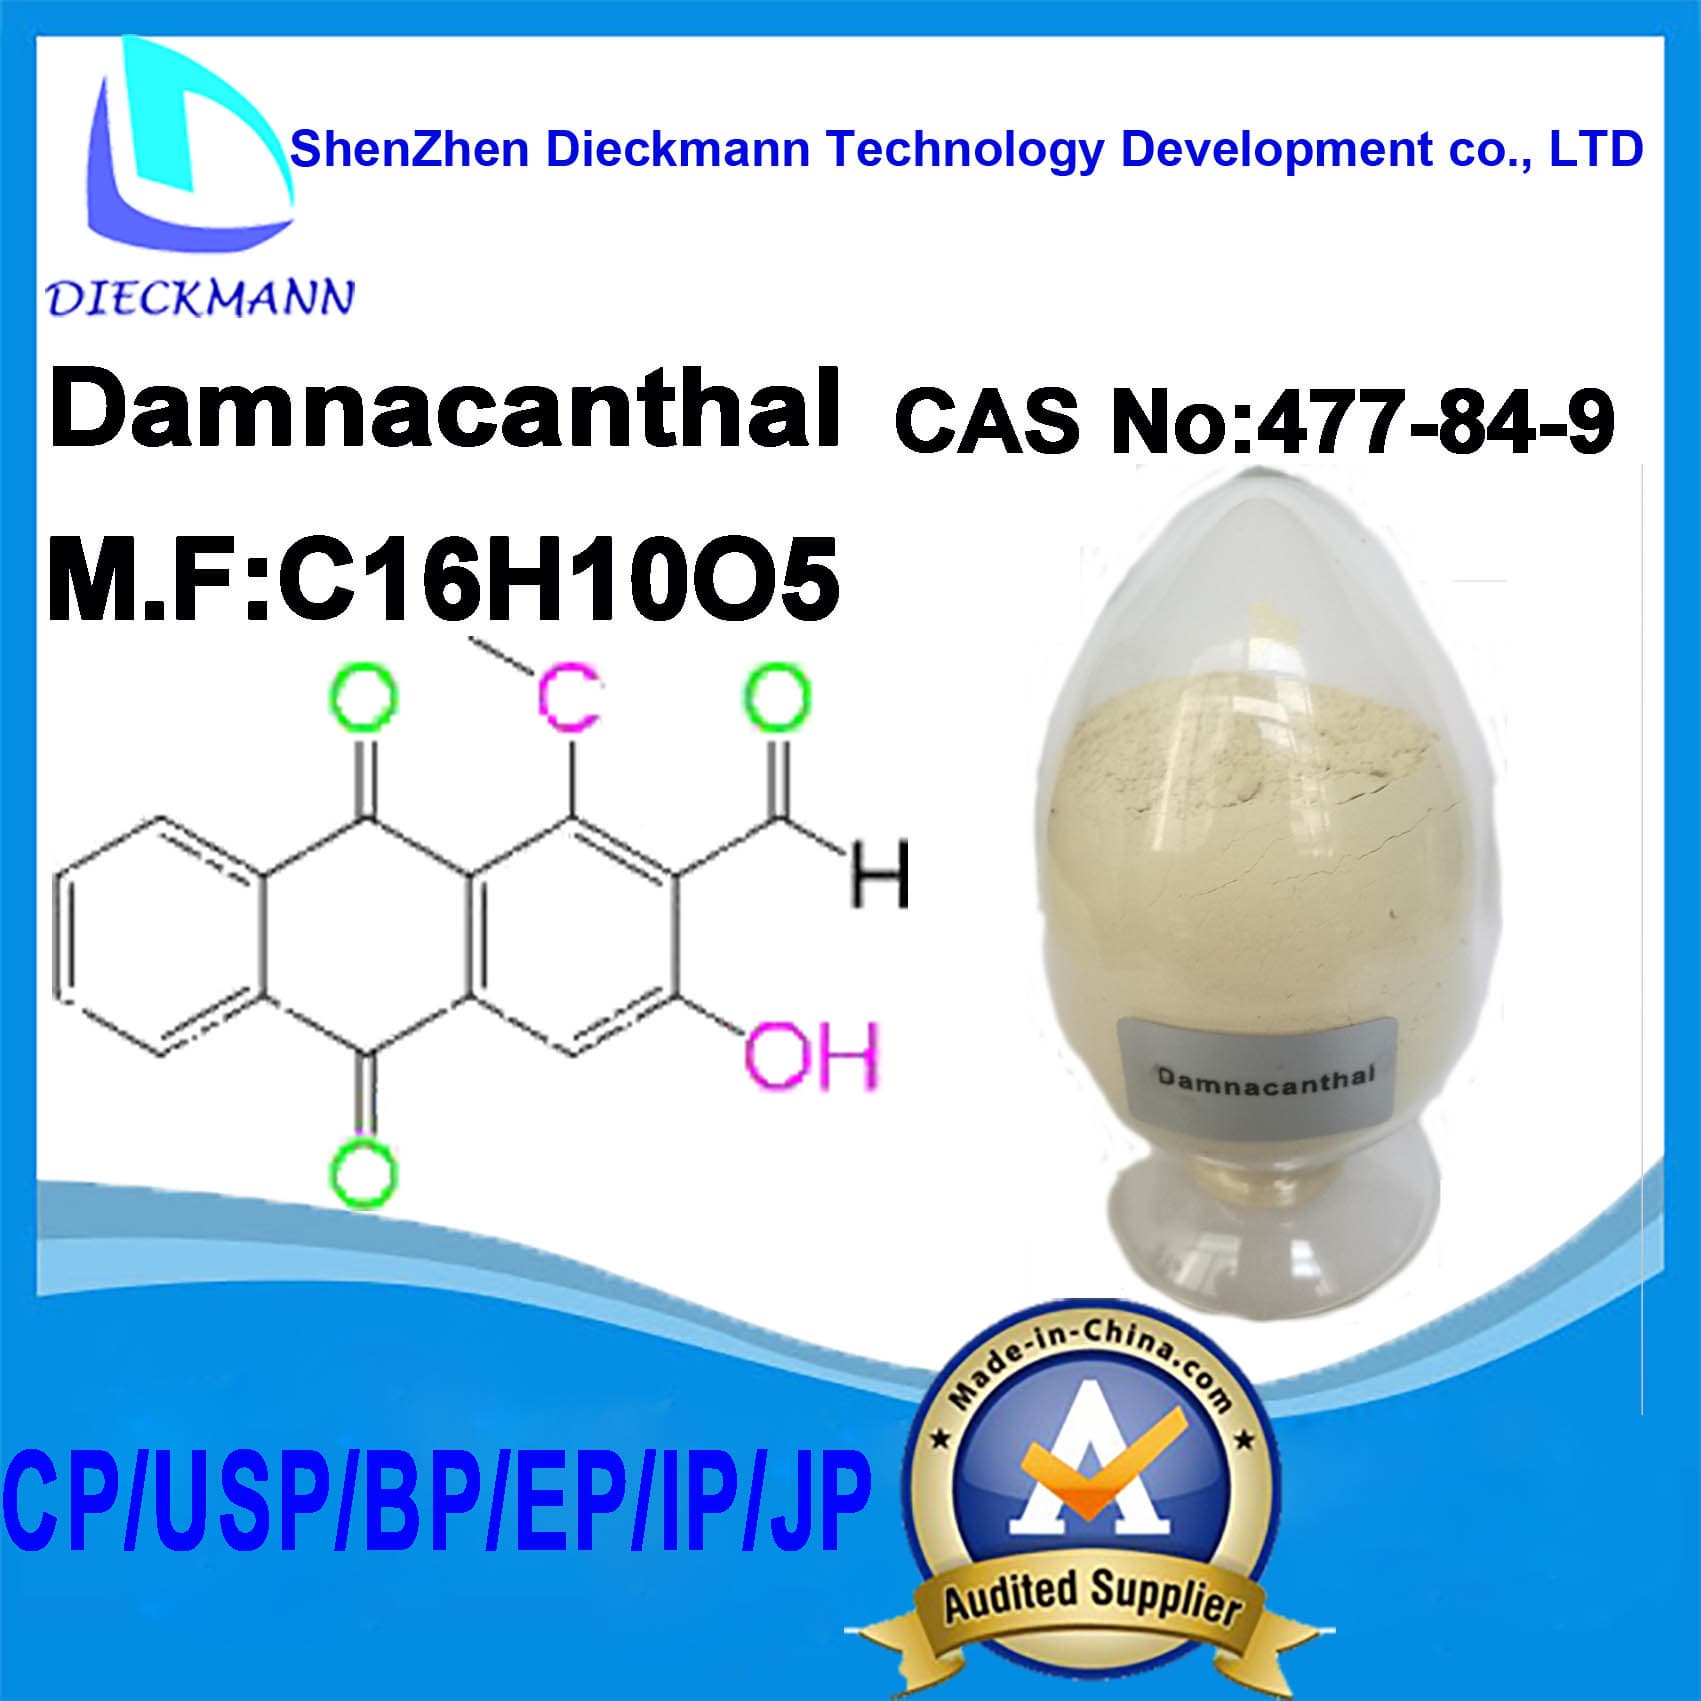 Damnacanthal CAS No 477_84_9